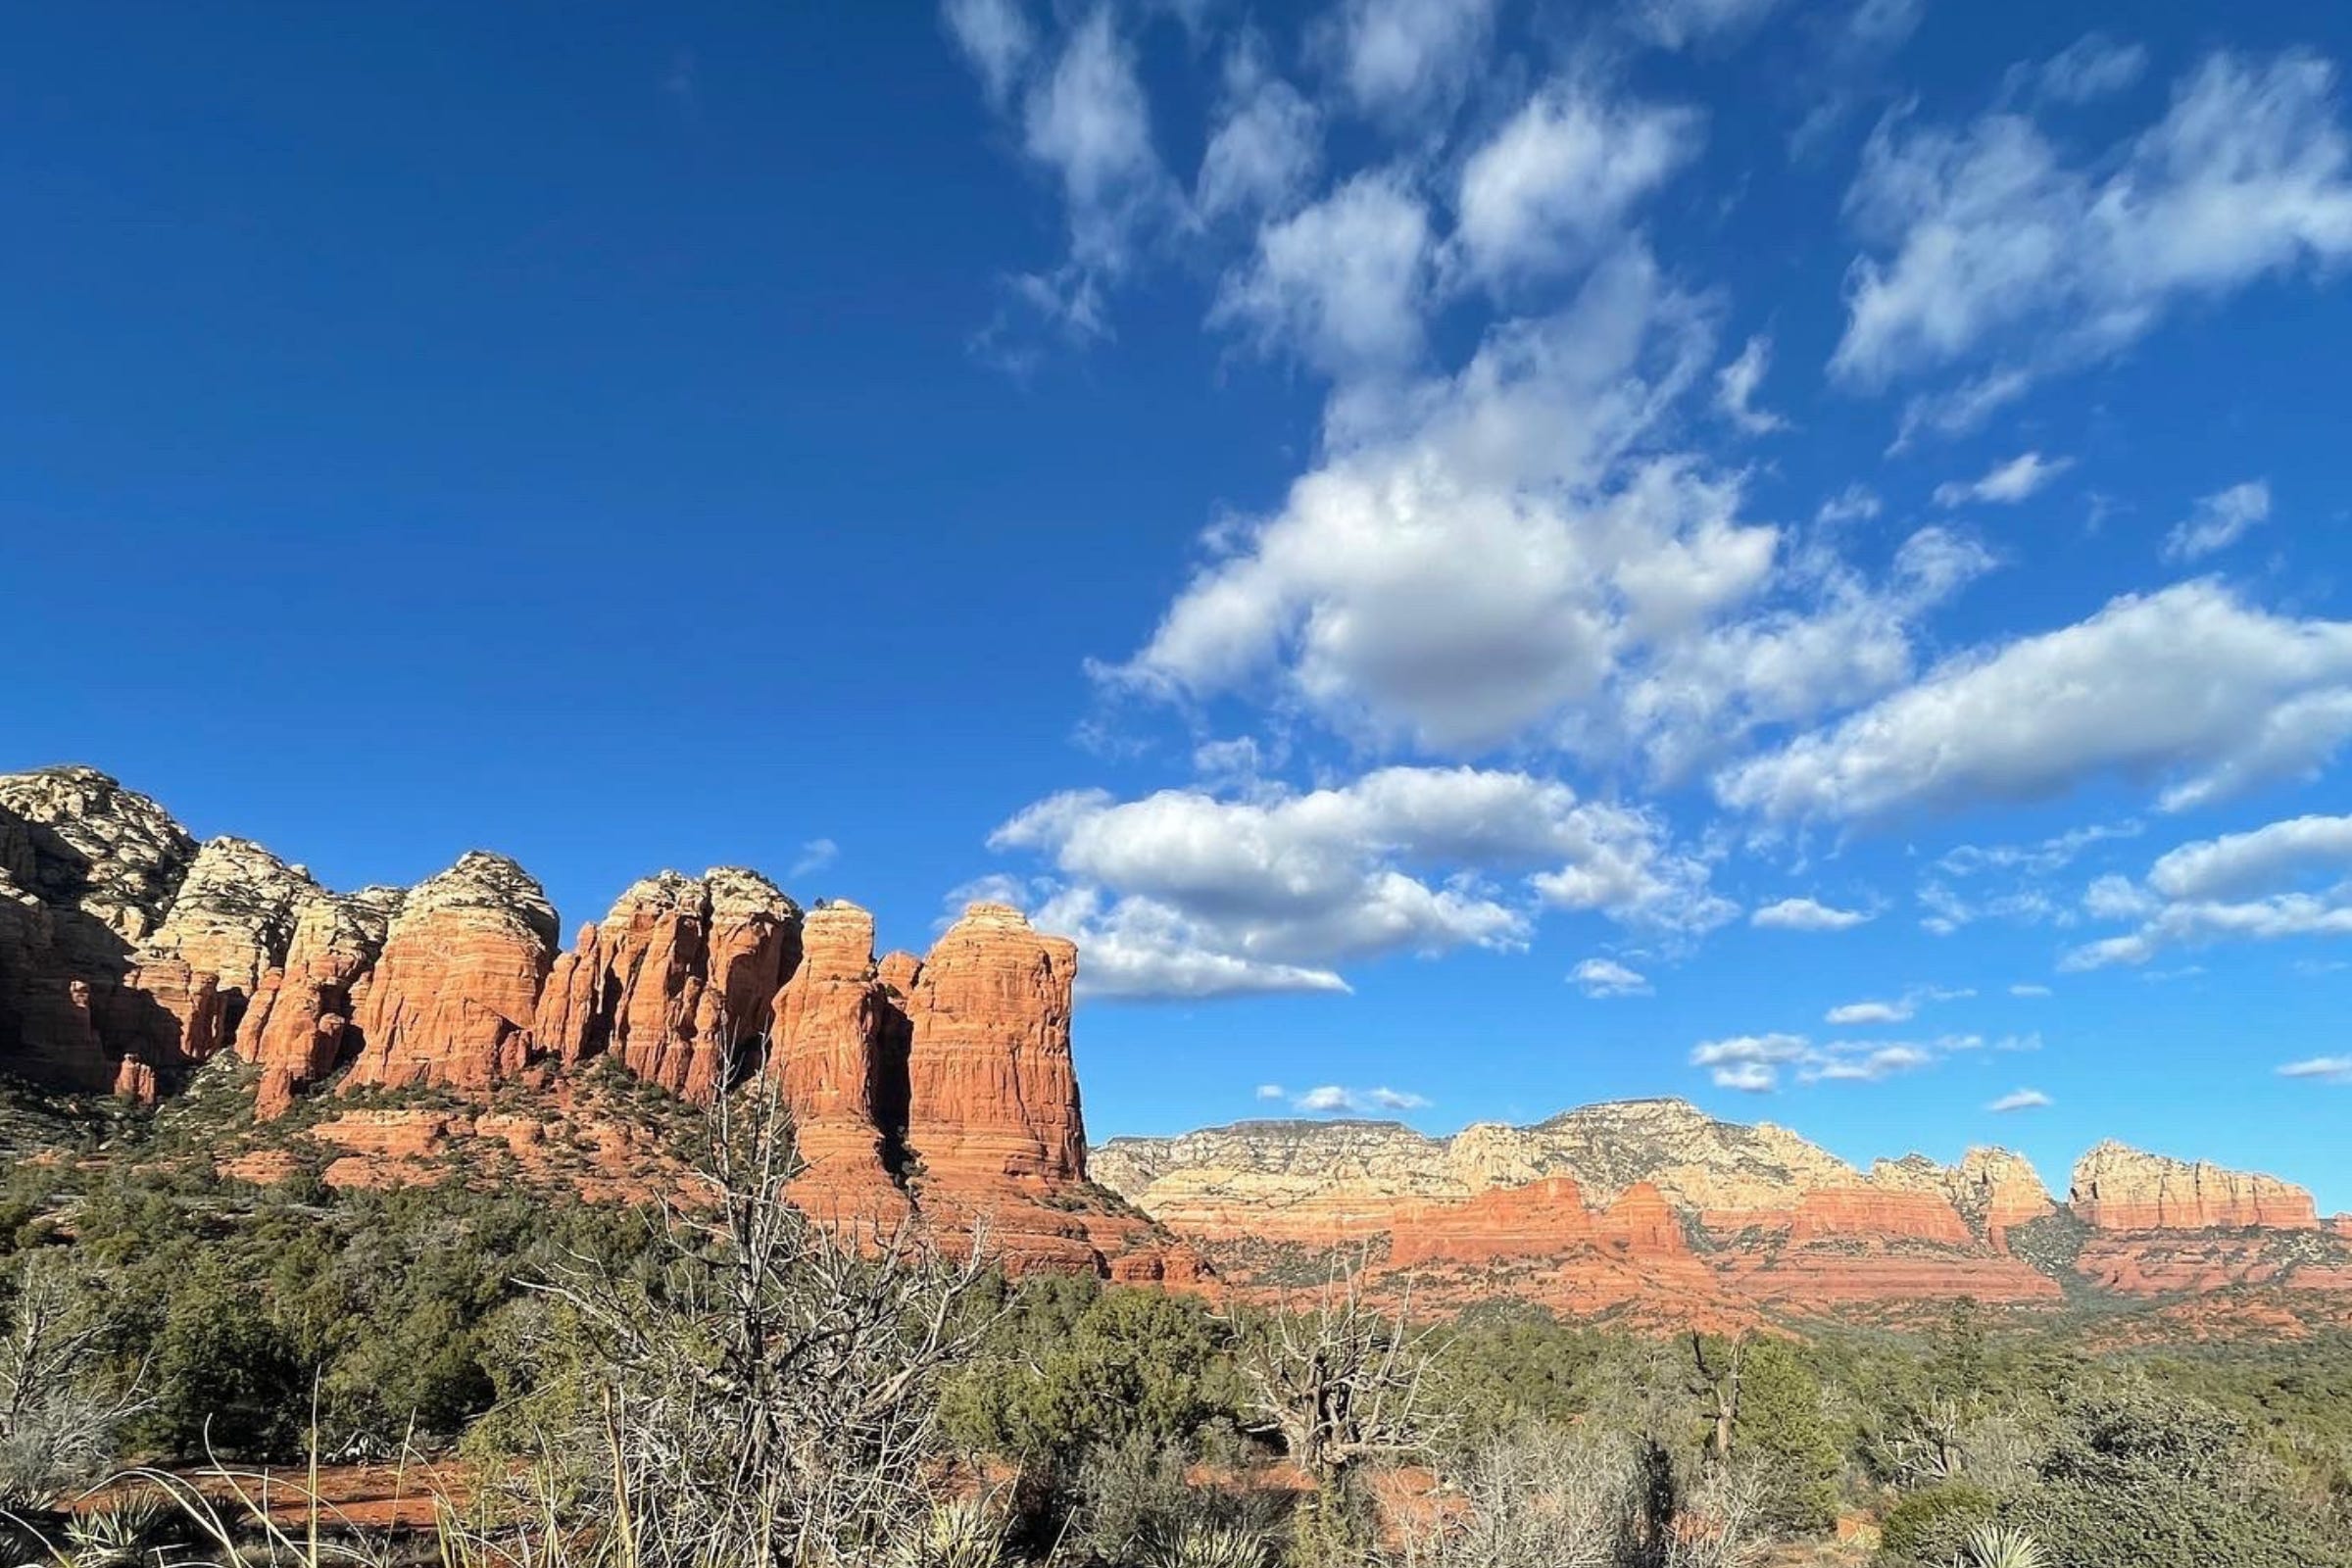 Peaceful view of sky and red rocks in Sedona Arizona